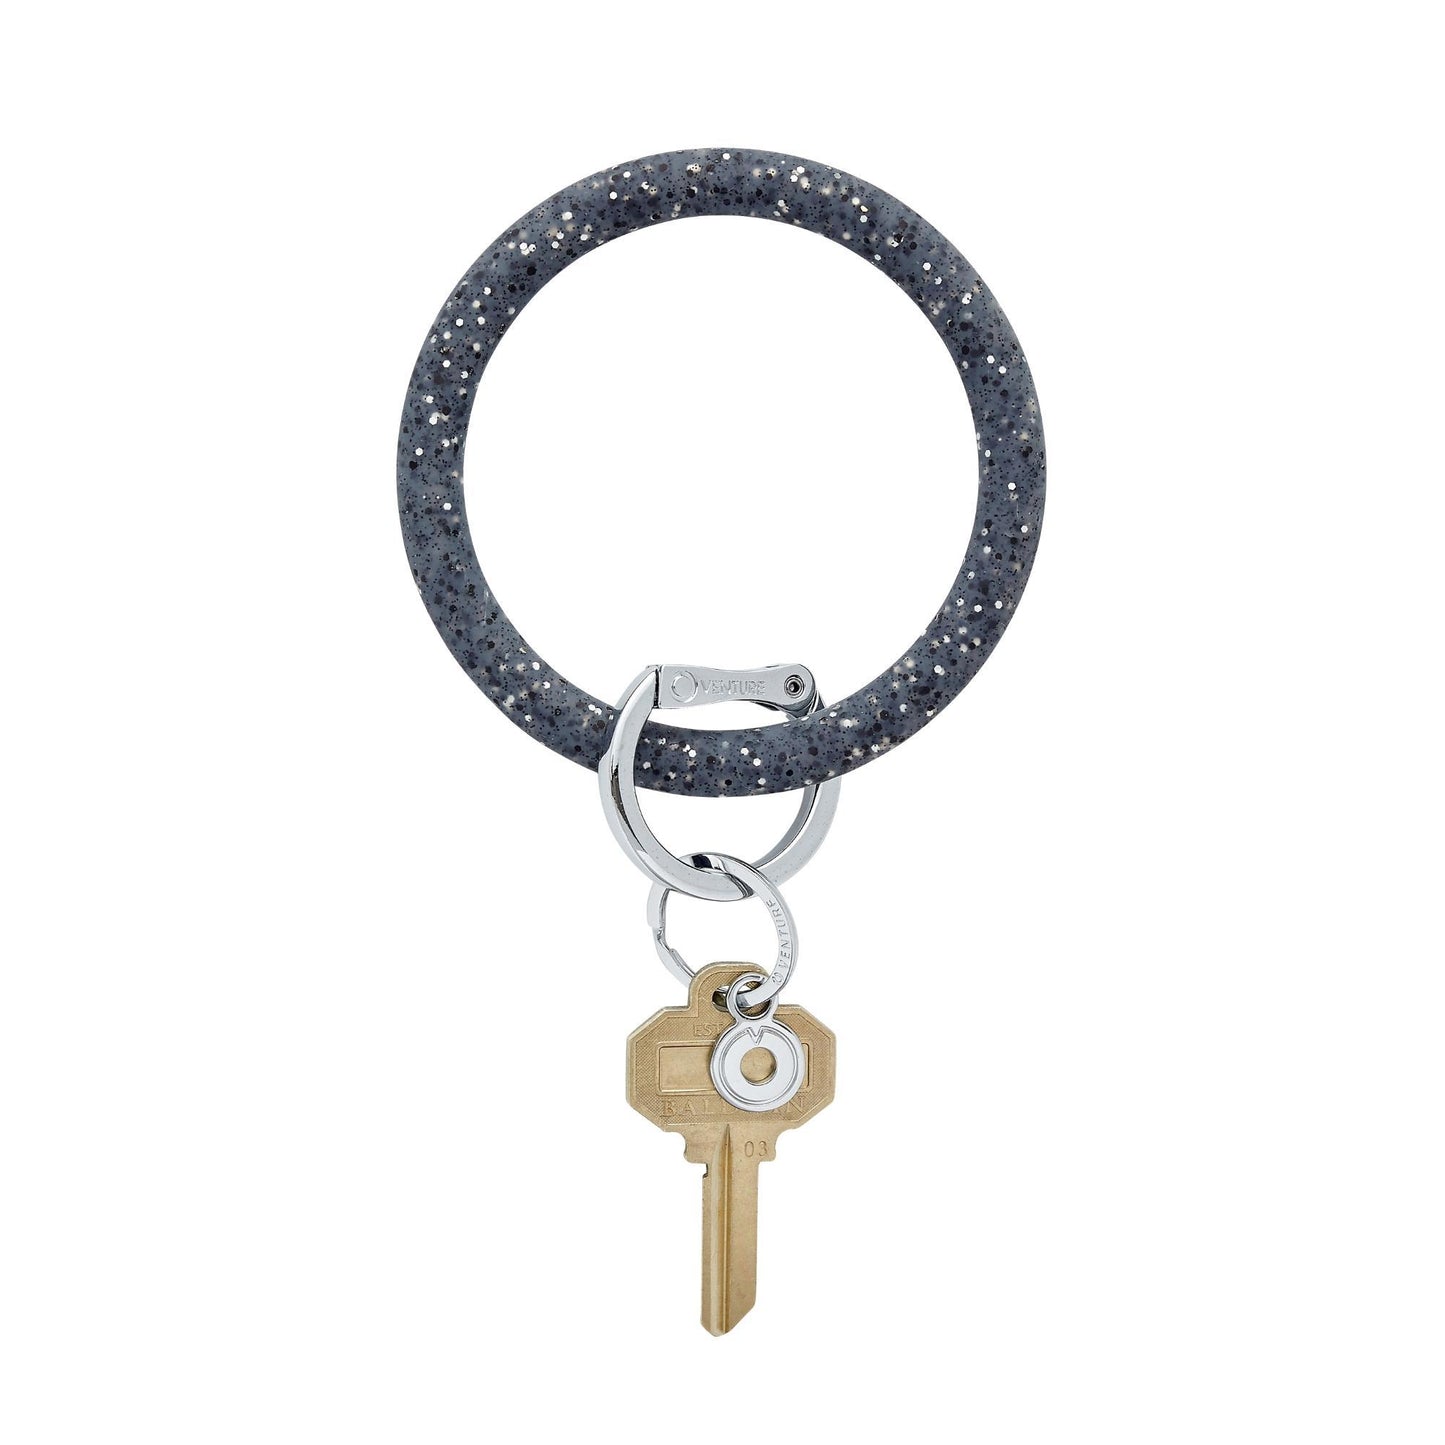 Big O Key Ring in Back in Black confetti silicone